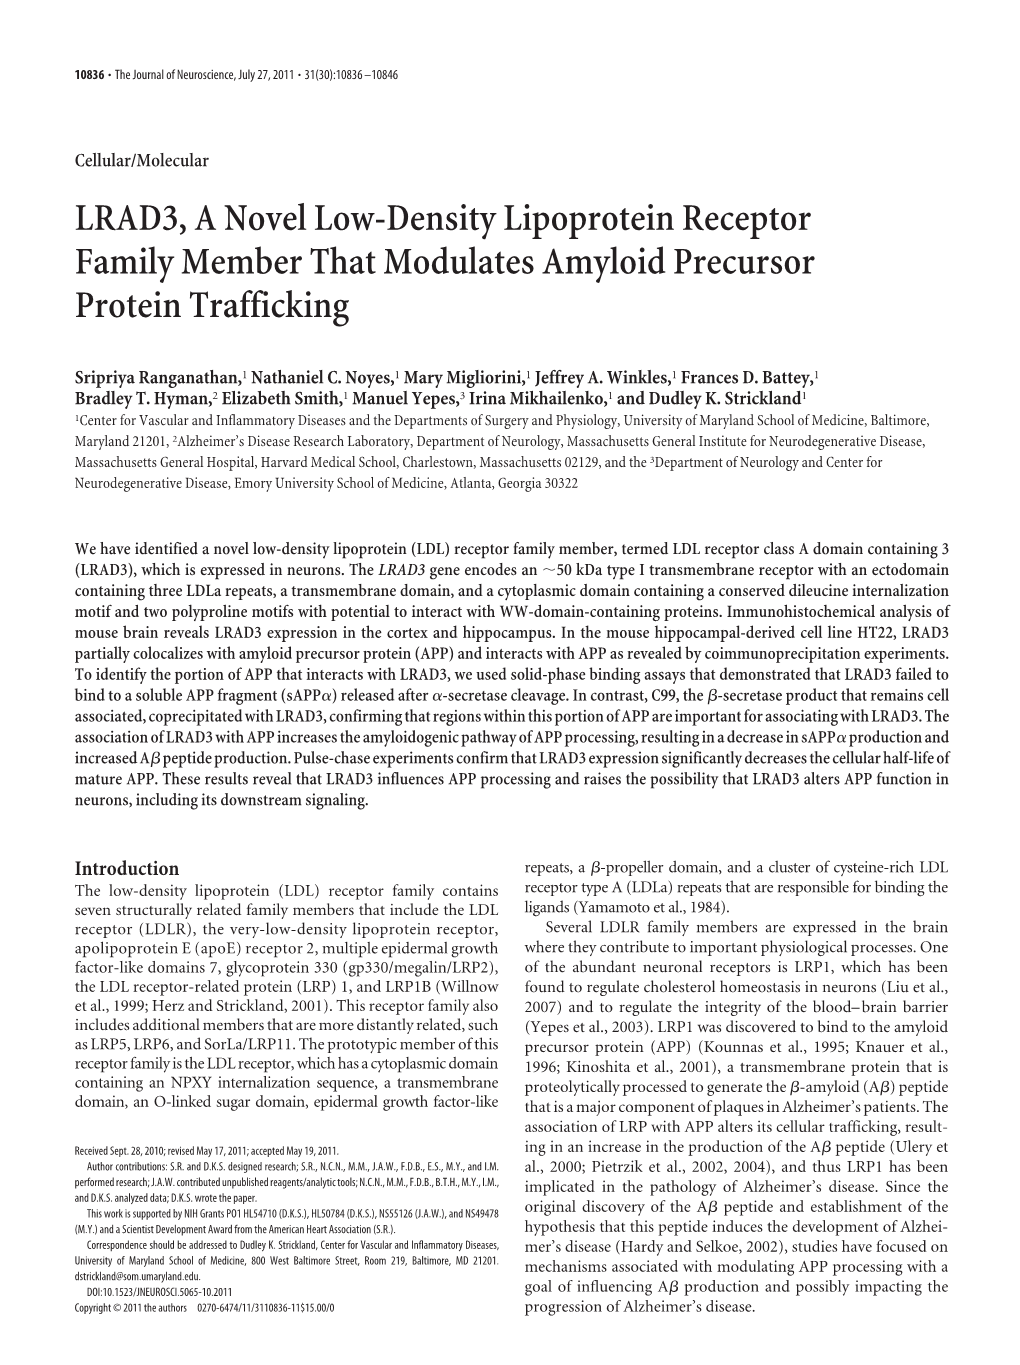 LRAD3, a Novel Low-Density Lipoprotein Receptor Family Member That Modulates Amyloid Precursor Protein Trafficking